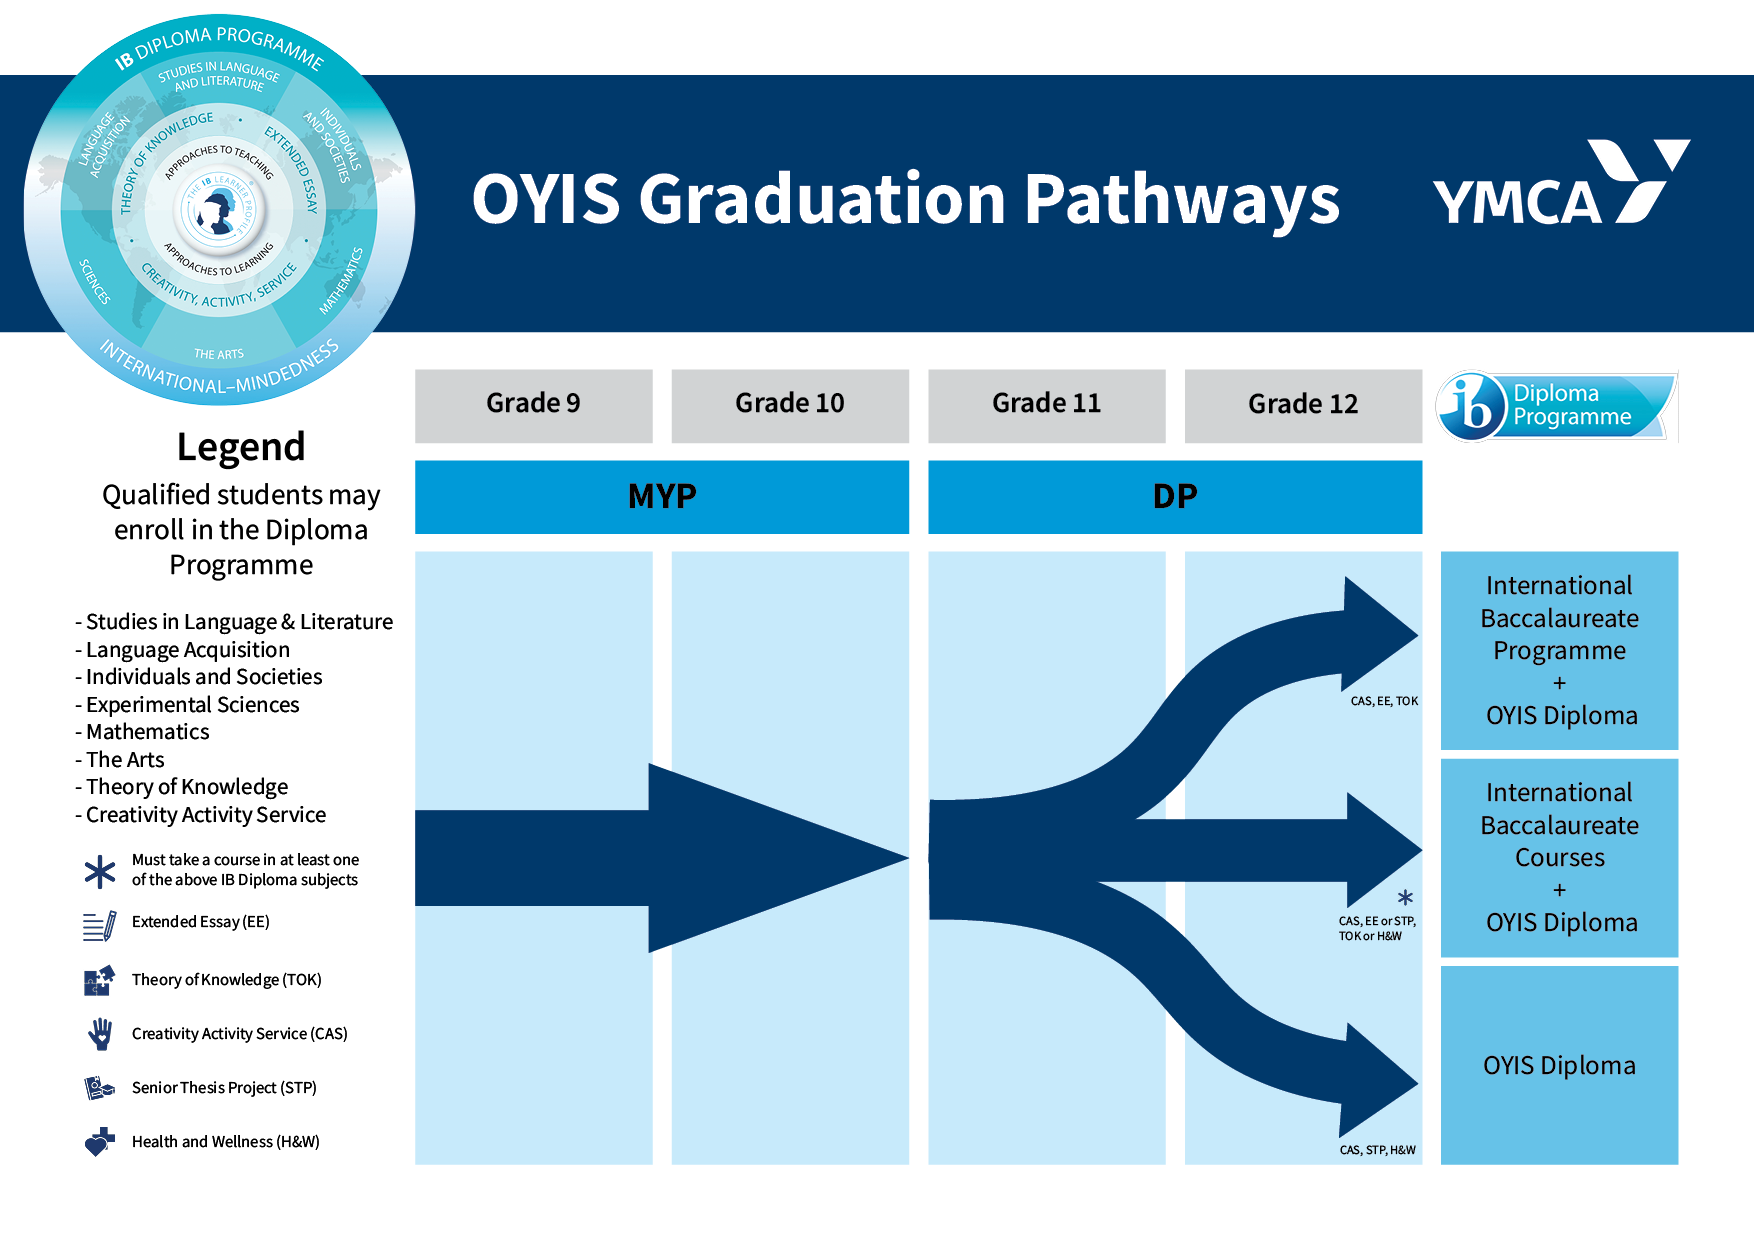 OYIS Graduation Pathways